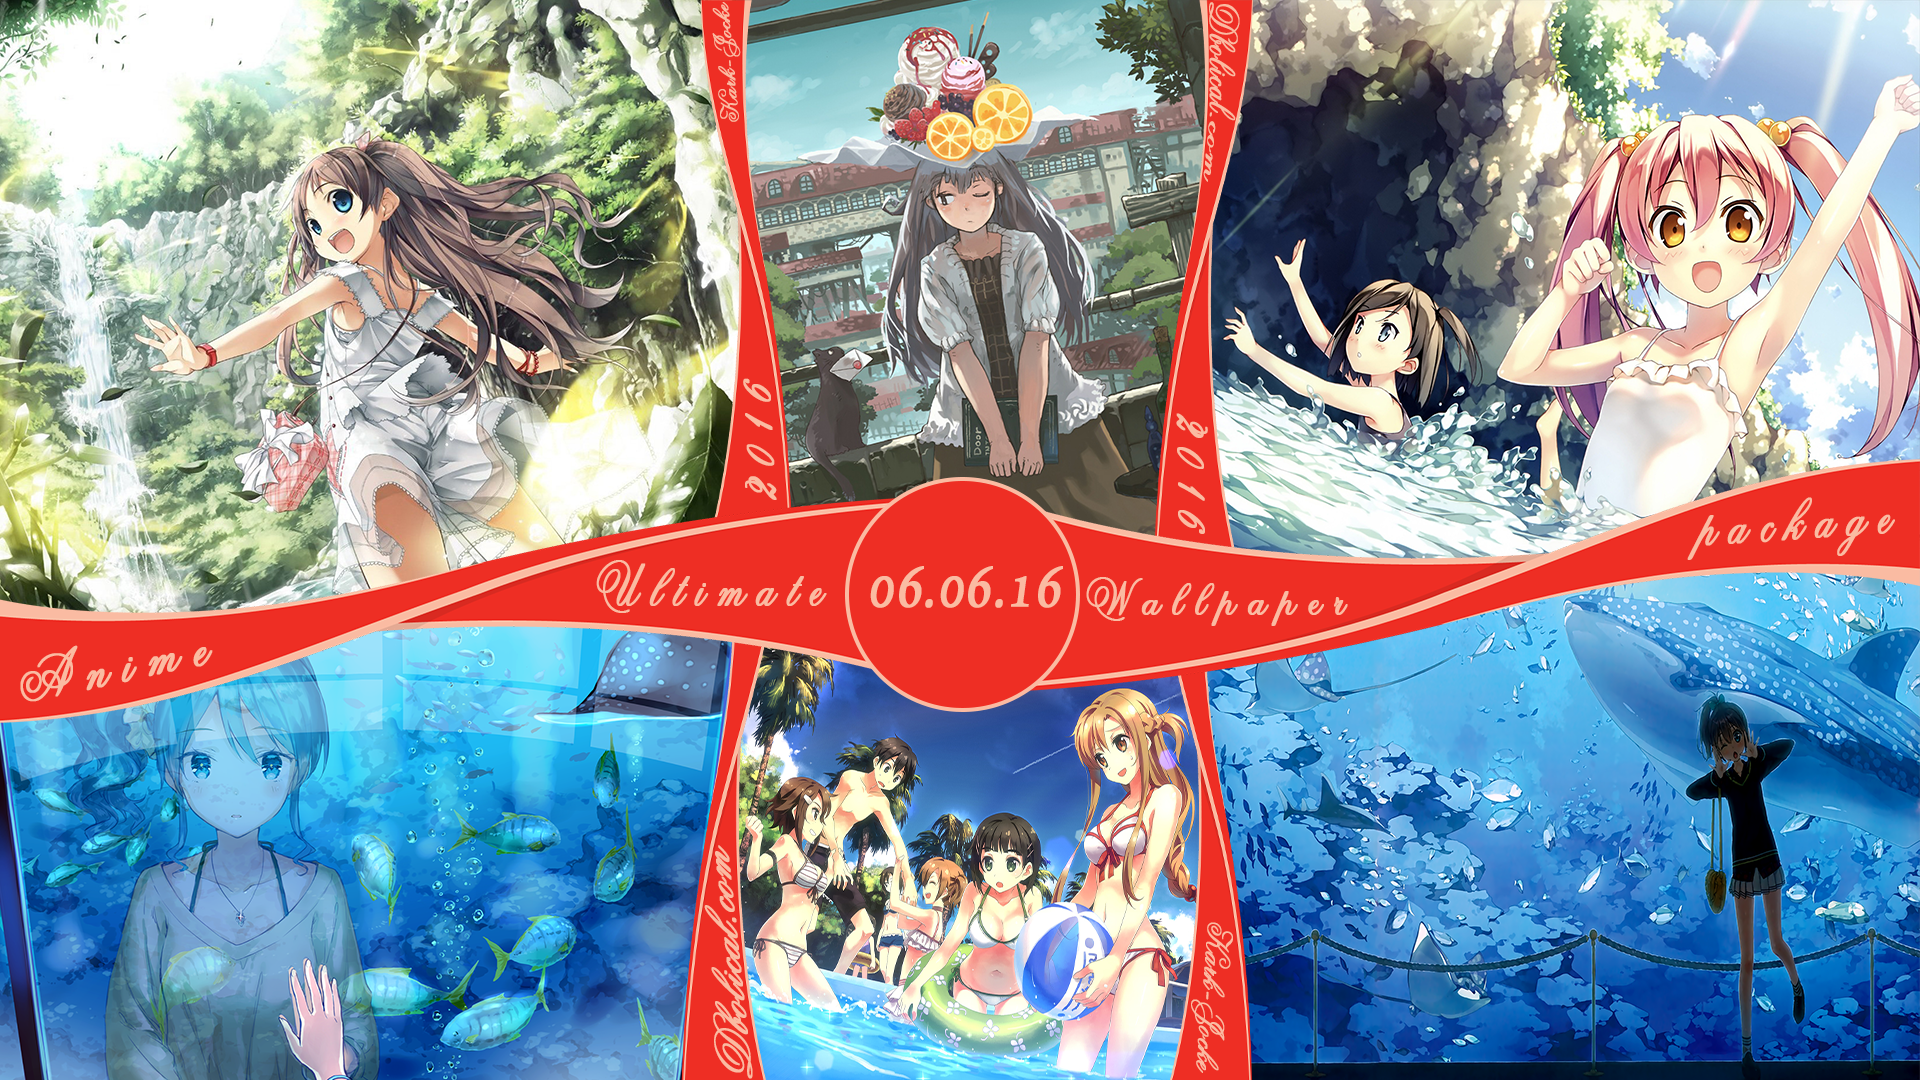 Old Anime Wallpaper's (Full-HD) - 04.04.15 file - ModDB